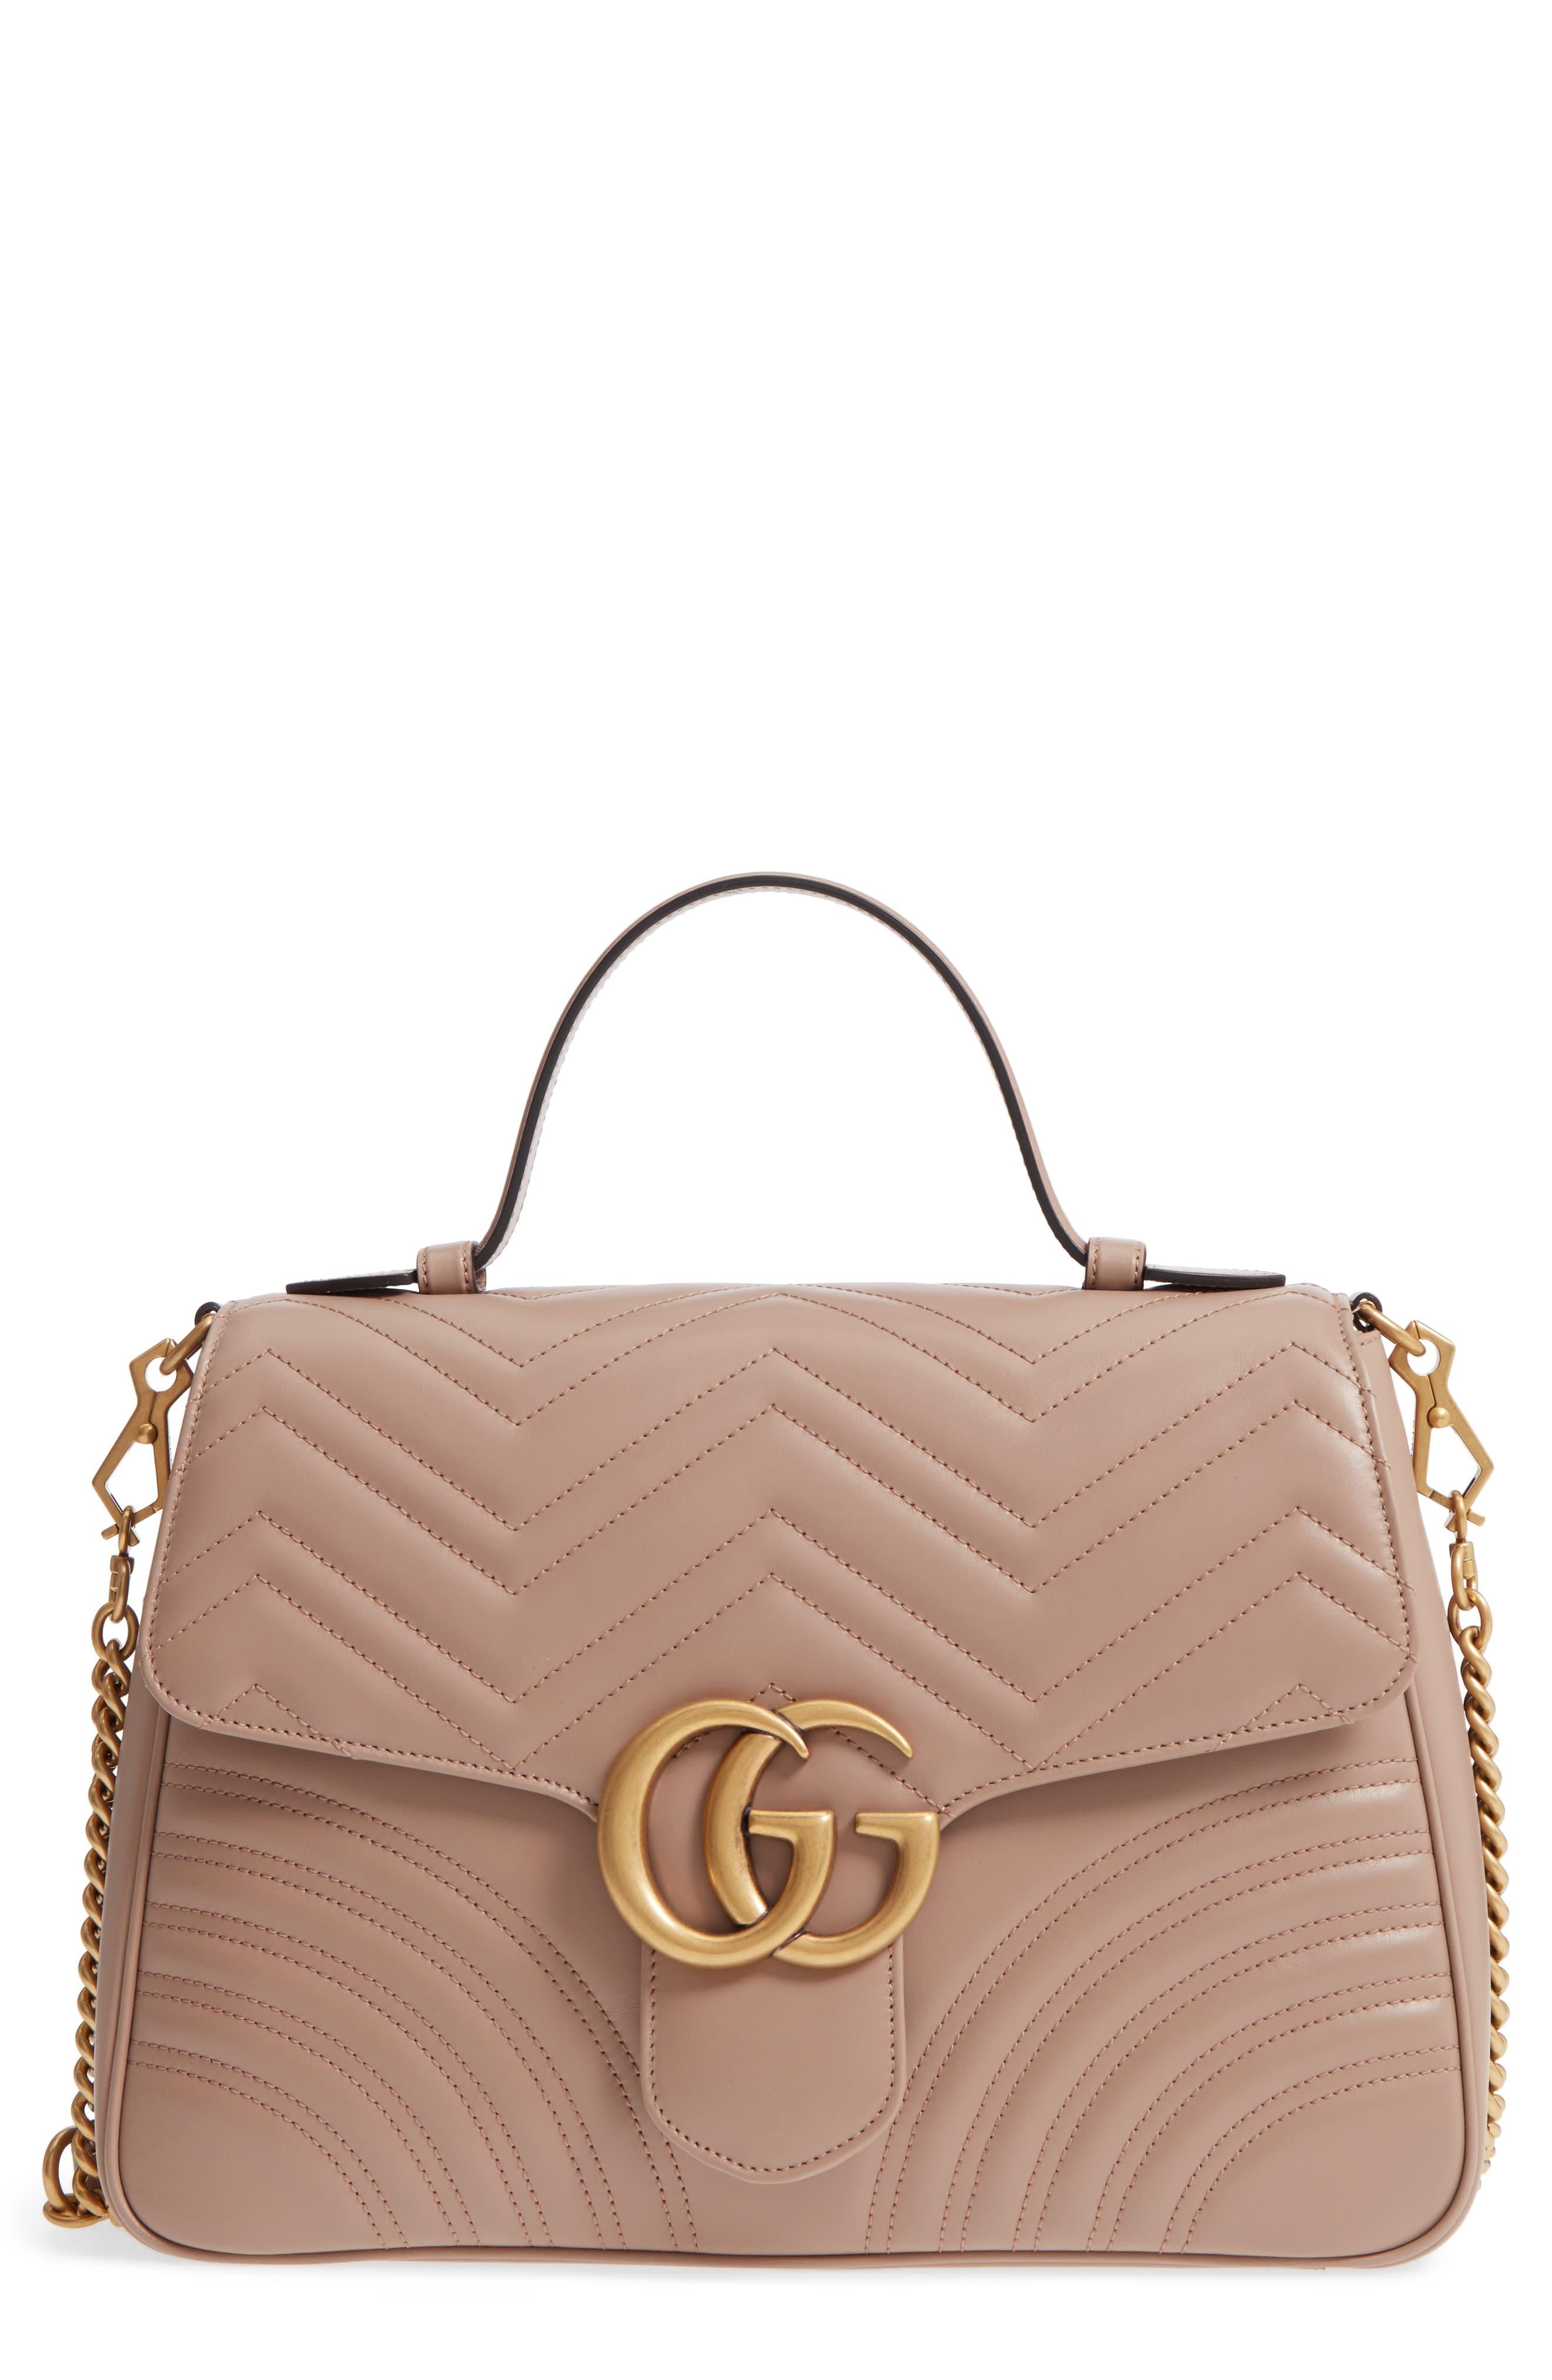 Nordstrom Gucci Bags Stolen | NAR Media Kit